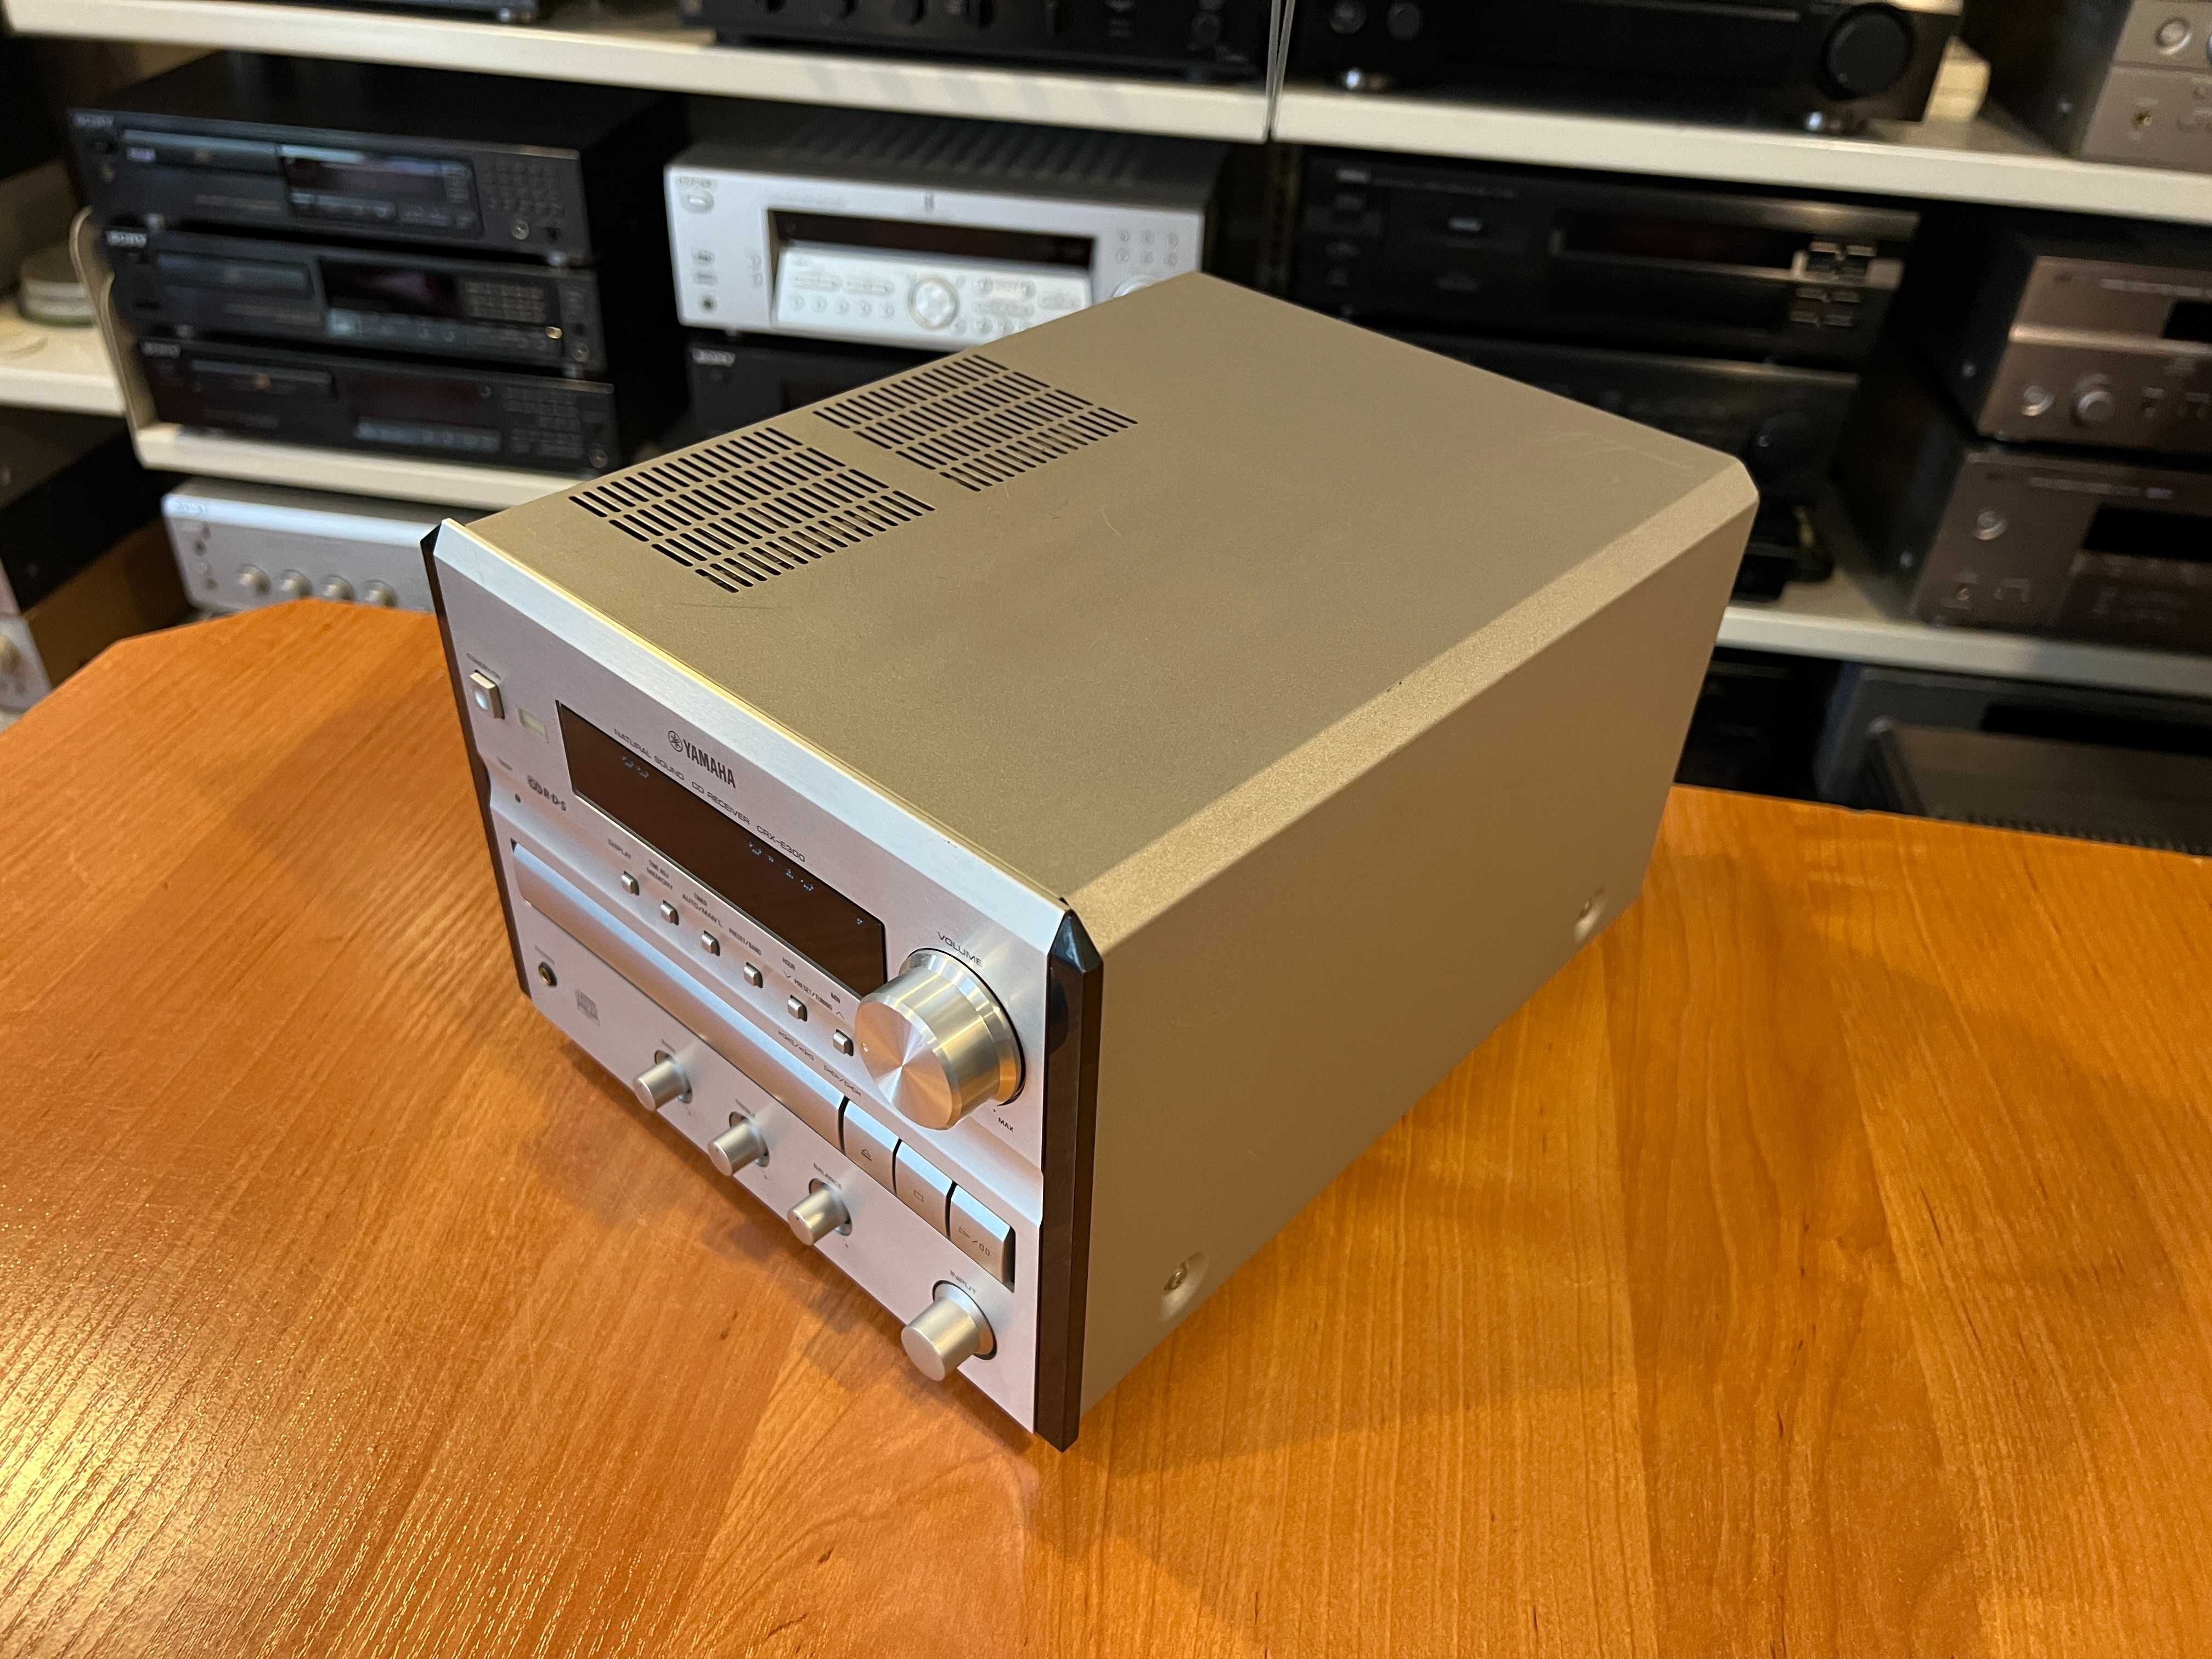 Amplituner/Wieża Yamaha PianoCraft CRX-E300 Audio Room